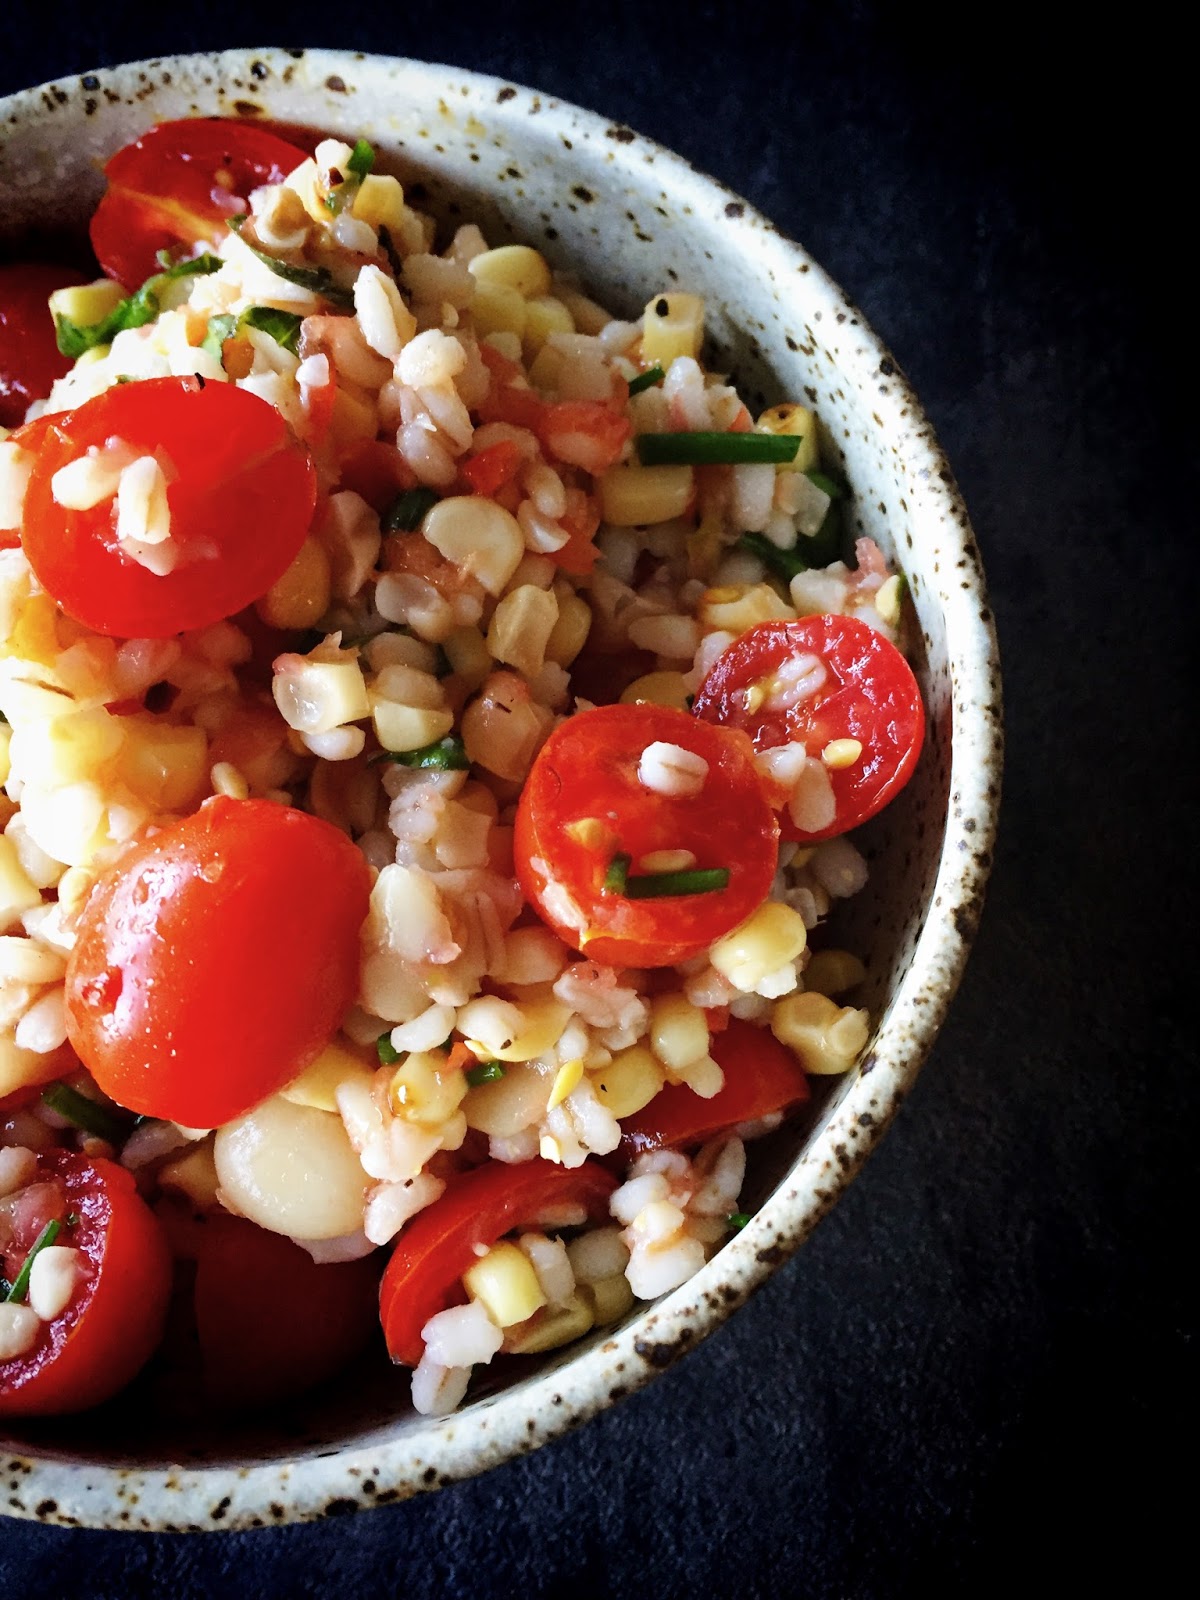 Corn-Barley Salad with Tomato Vinaigrette from Food52